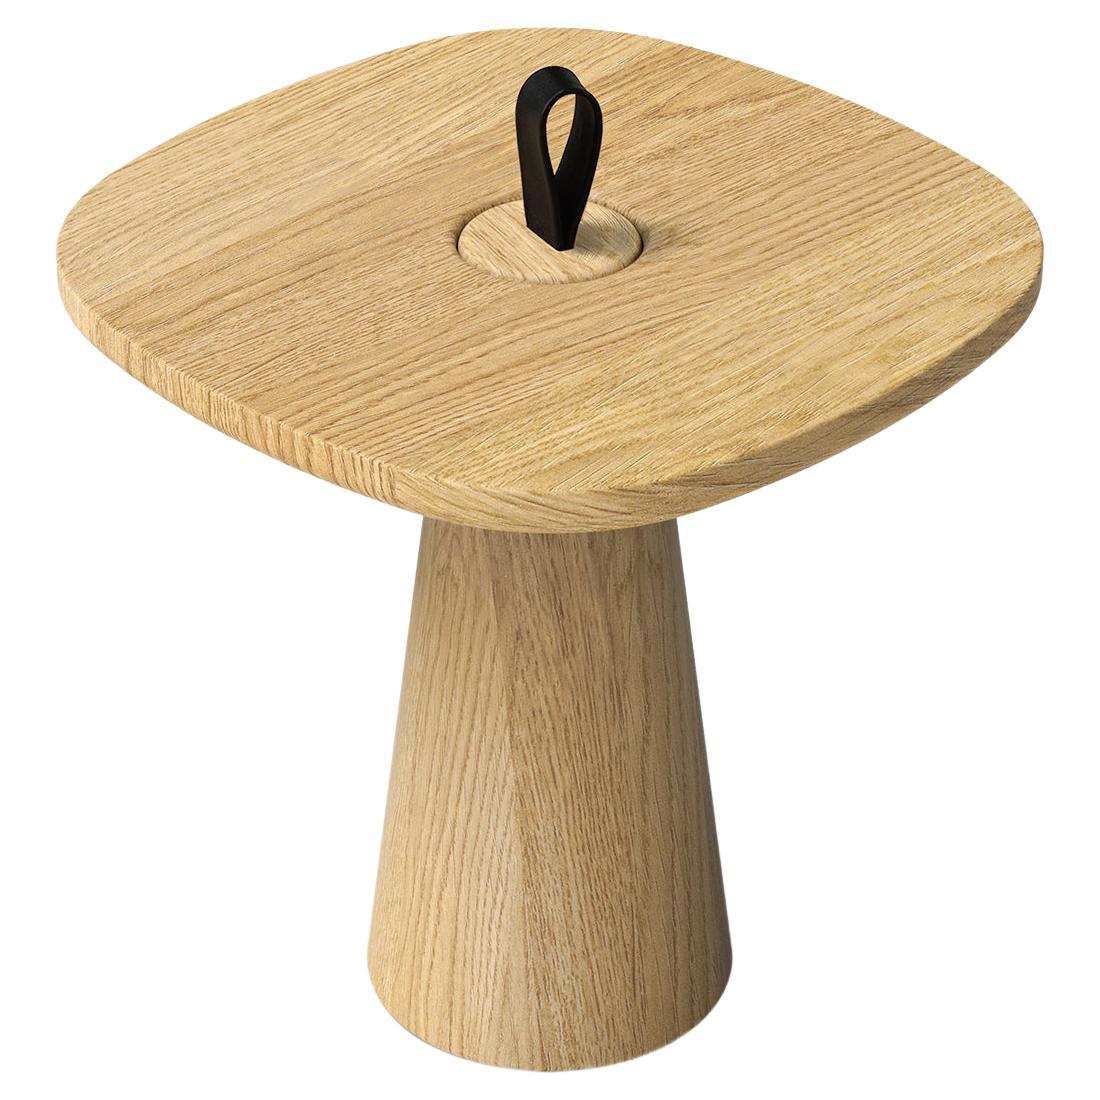 Table d'appoint moderne minimaliste en chêne naturel et sangle en cuir